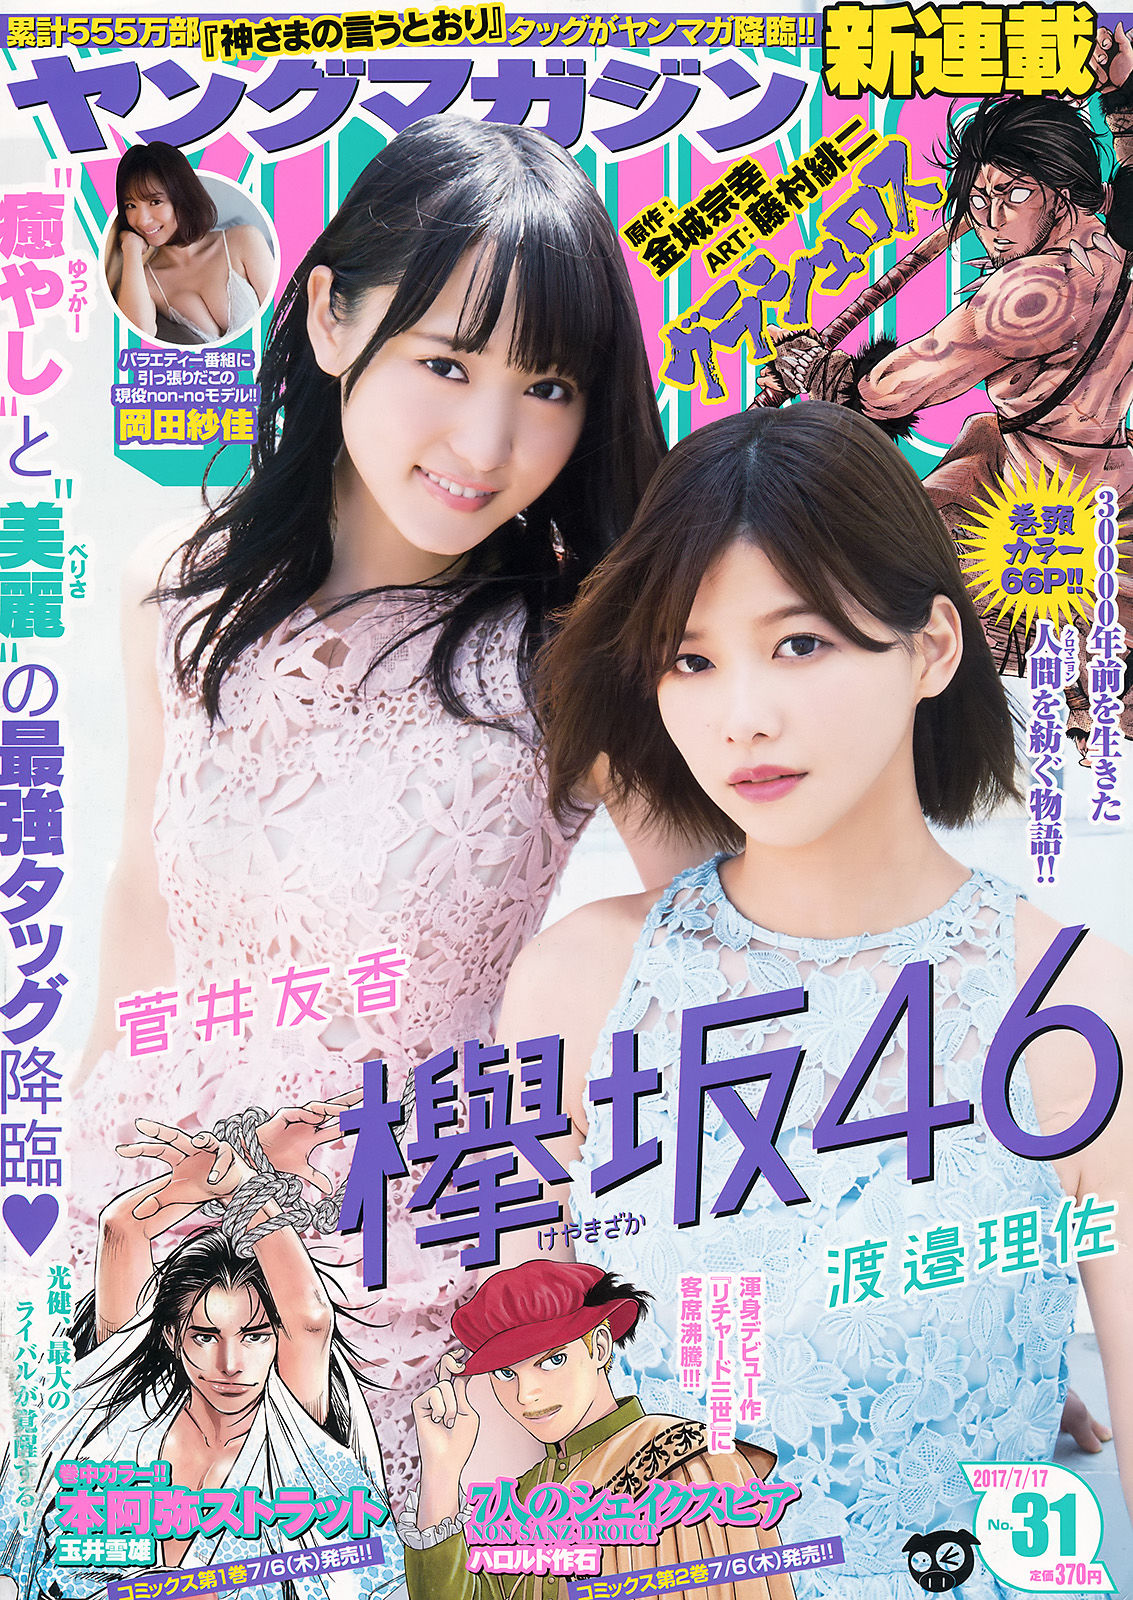 [Young Magazine] 2017年No.31 渡邉理佐 菅井友香 岡田紗佳1